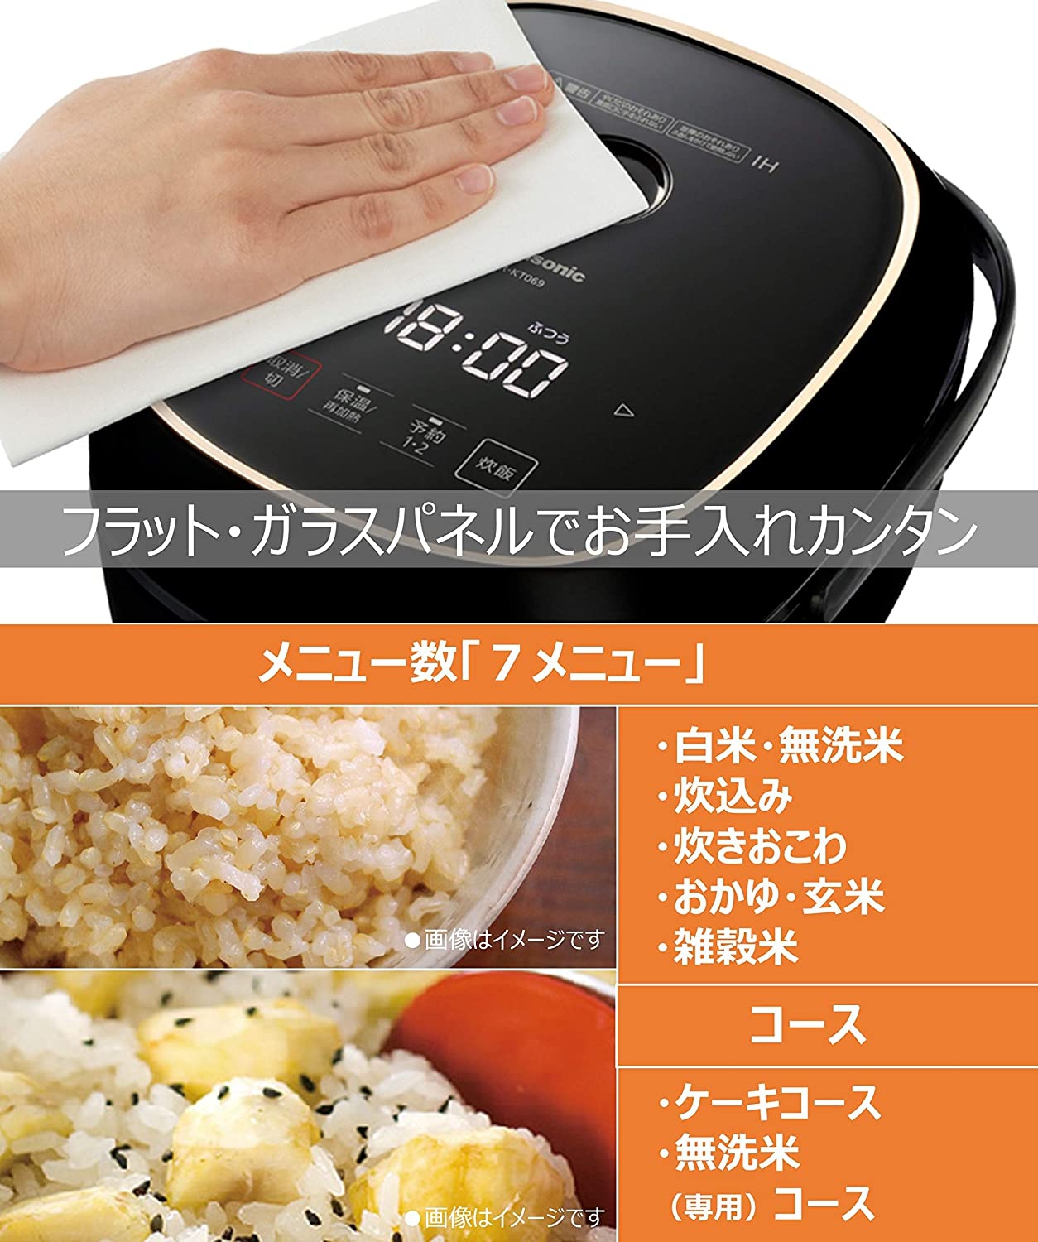 Panasonic(パナソニック) IHジャー炊飯器 SR-KT069の商品画像4 